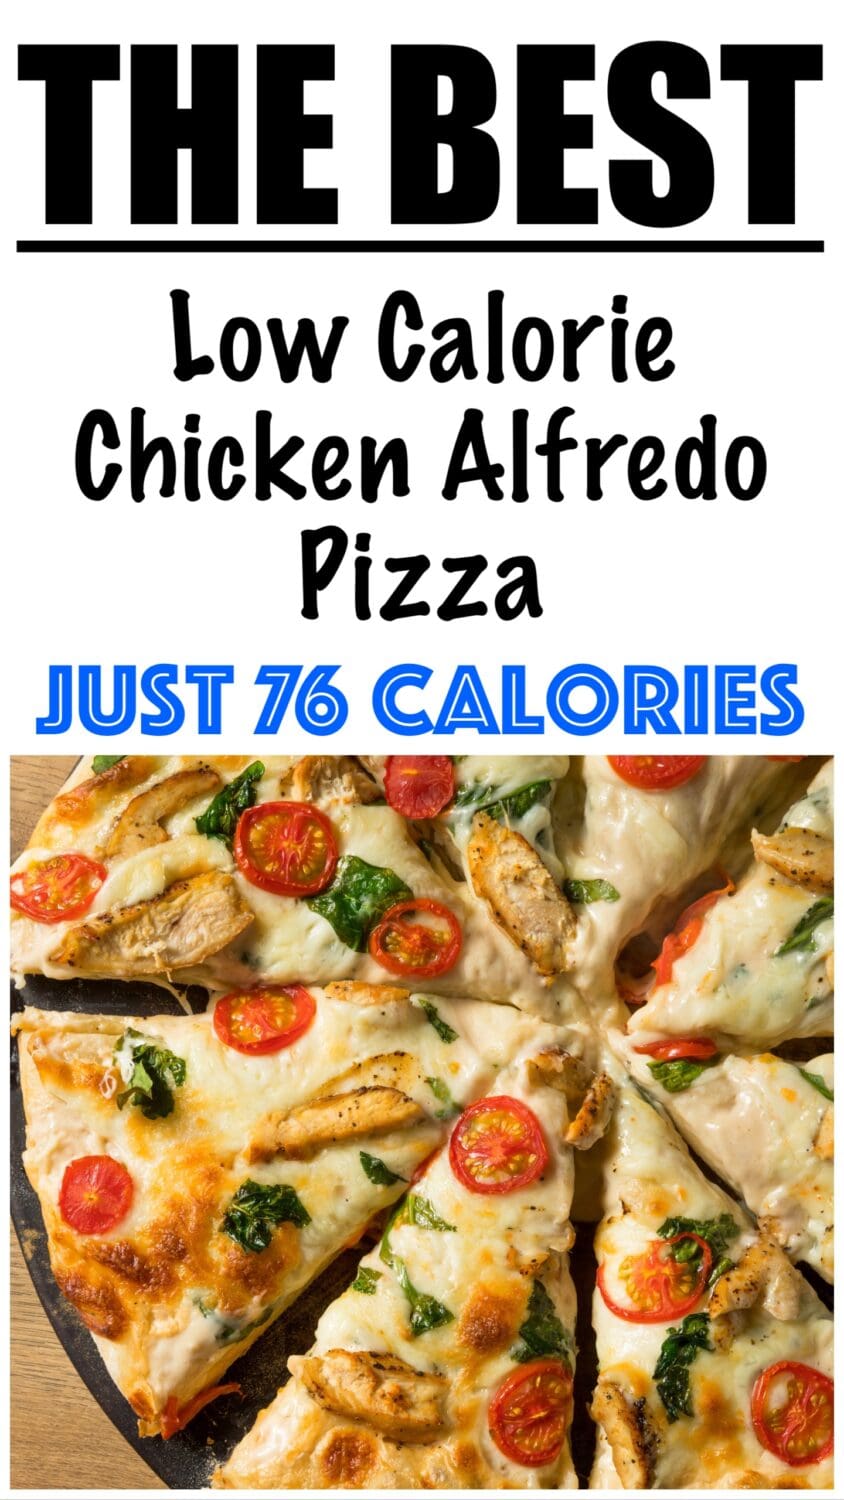 Low Calorie Chicken Alfredo Pizza